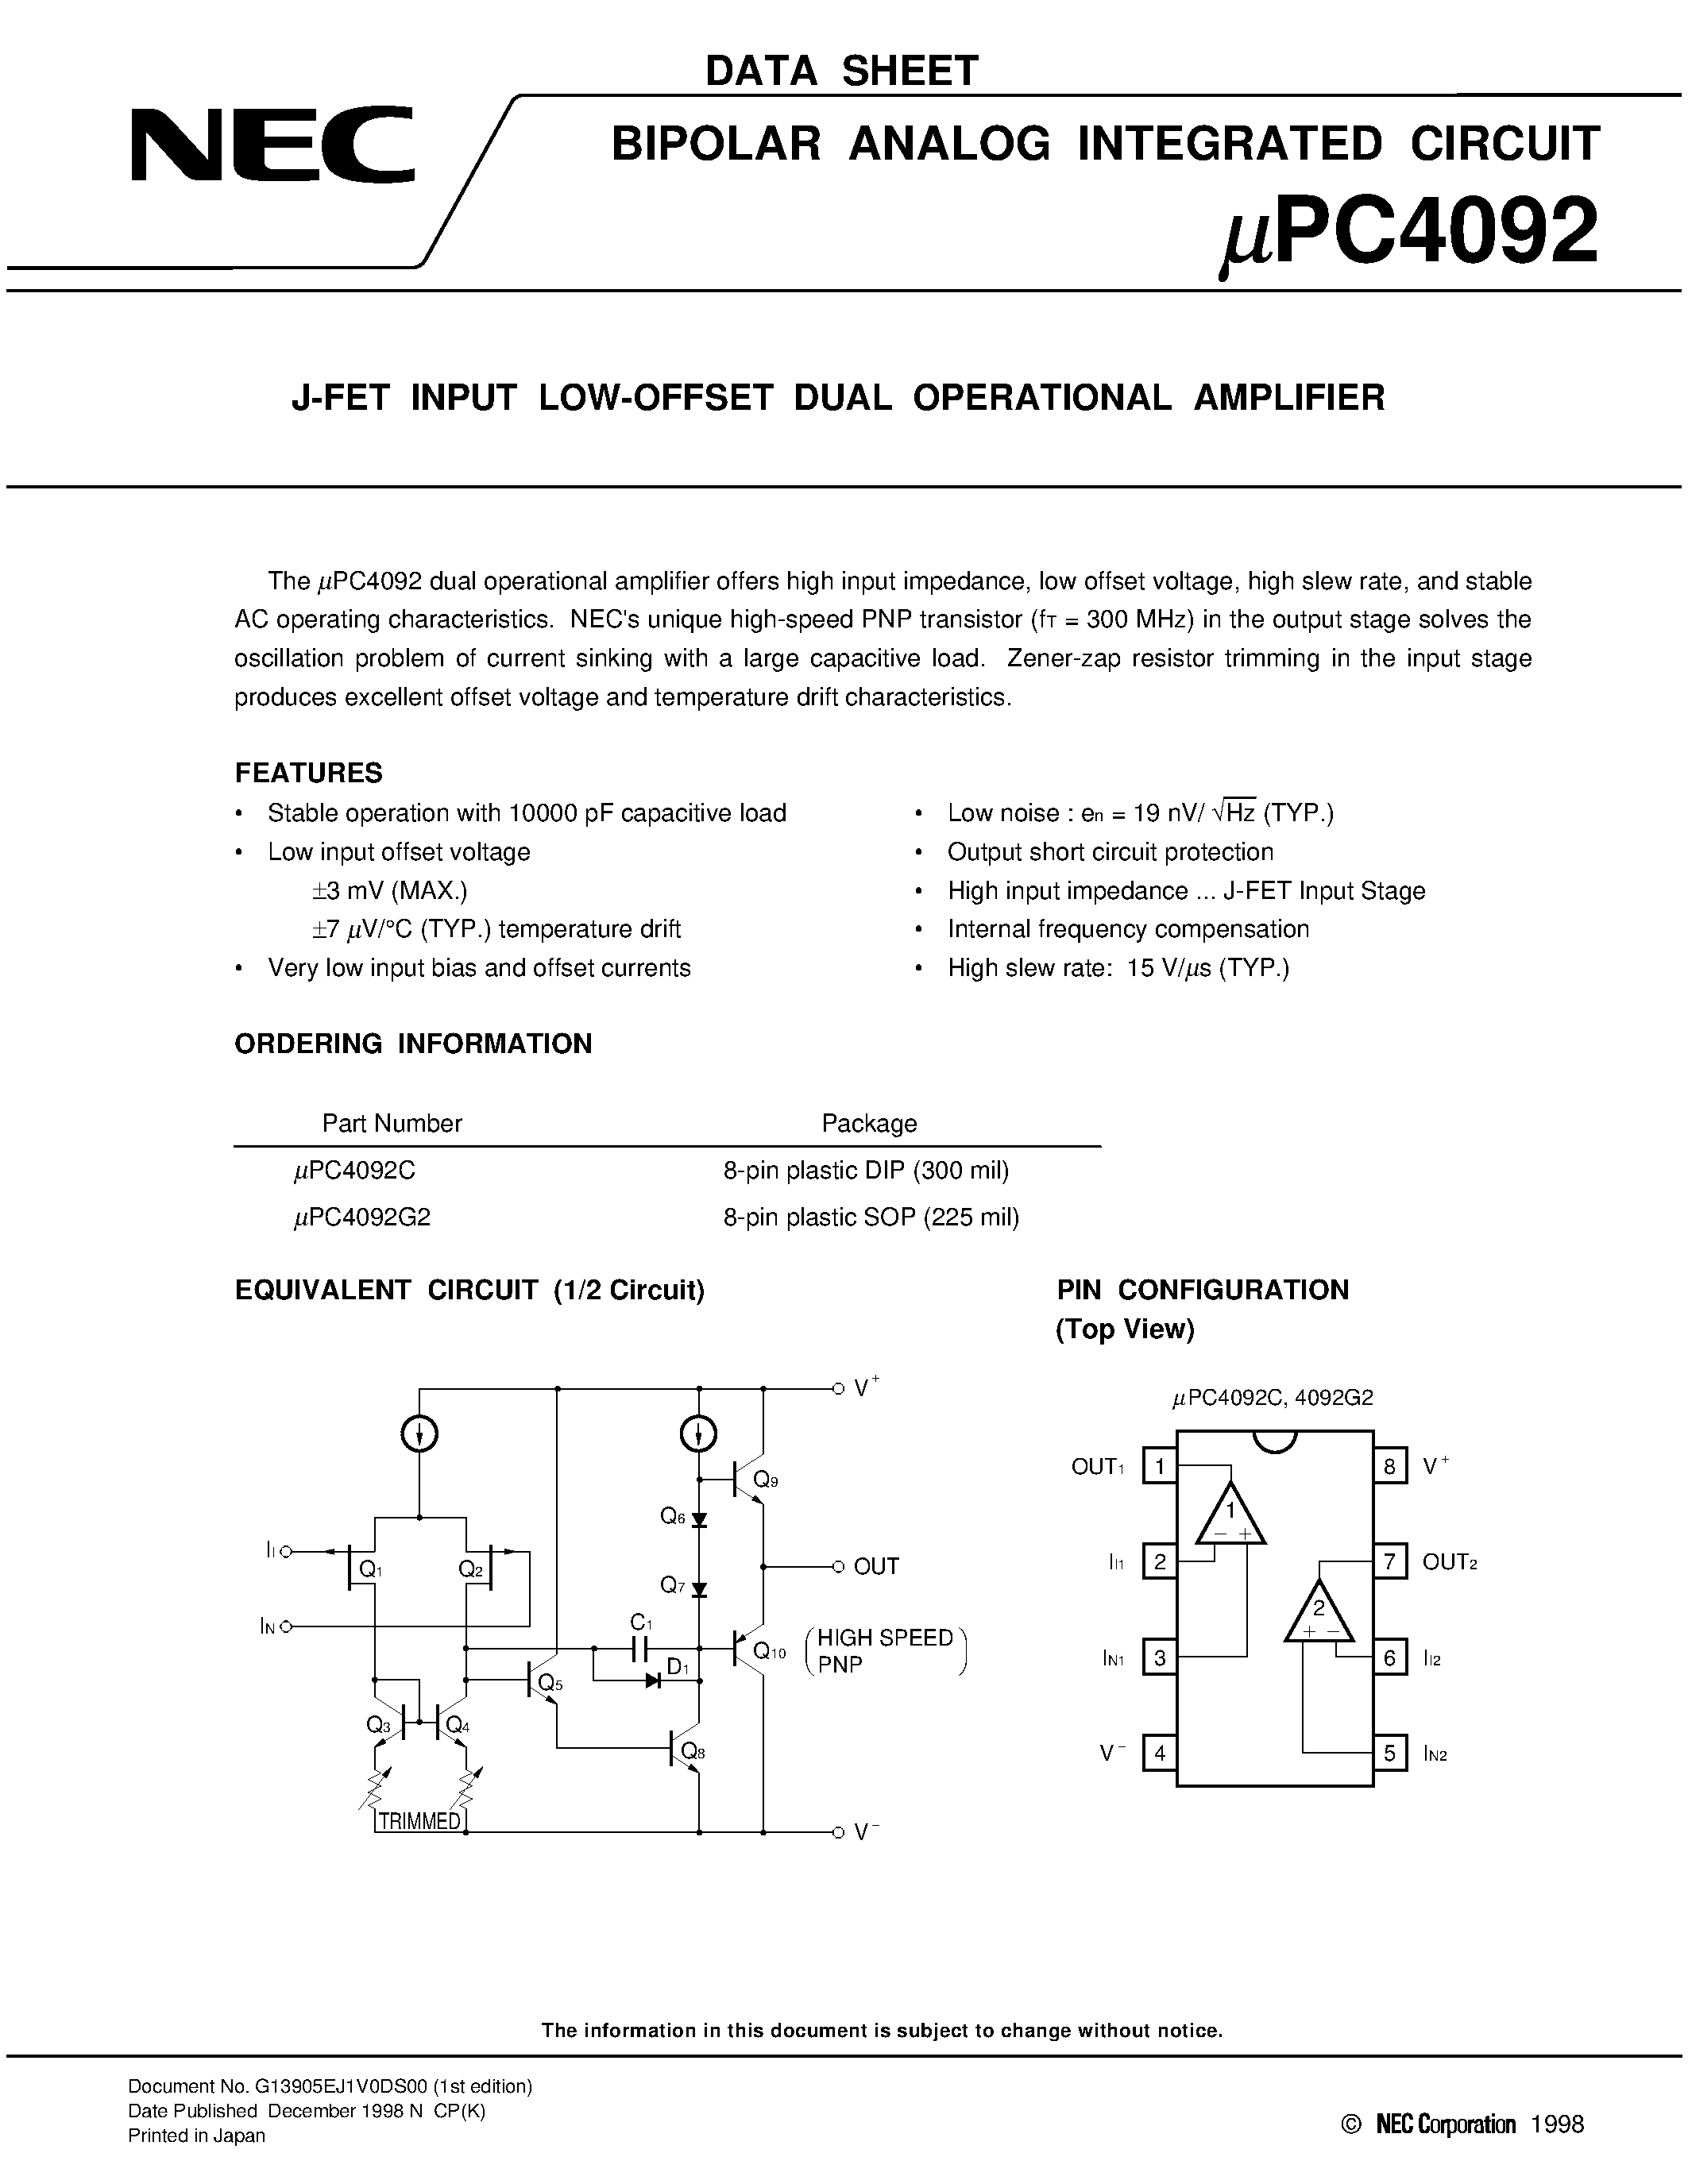 Datasheet UPC4092 - J-FET INPUT LOW-OFFSET DUAL OPERATIONAL AMPLIFIER page 1